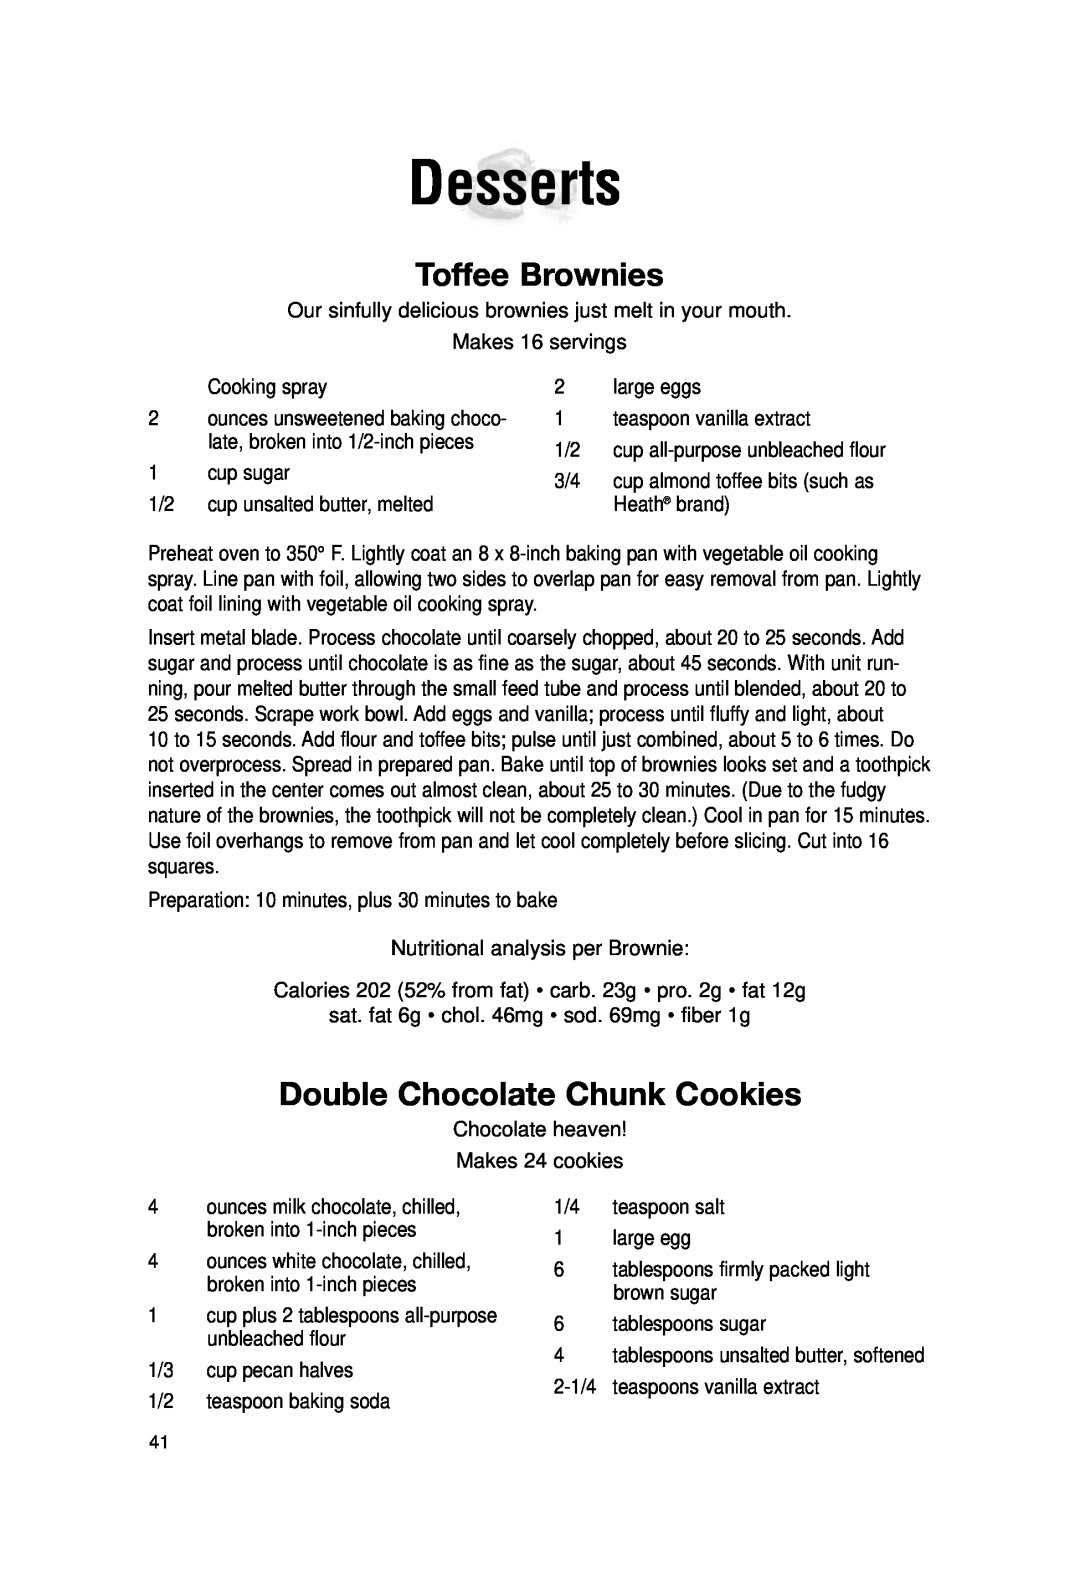 Cuisinart DLC-2007N manual Desserts, Toffee Brownies, Double Chocolate Chunk Cookies 